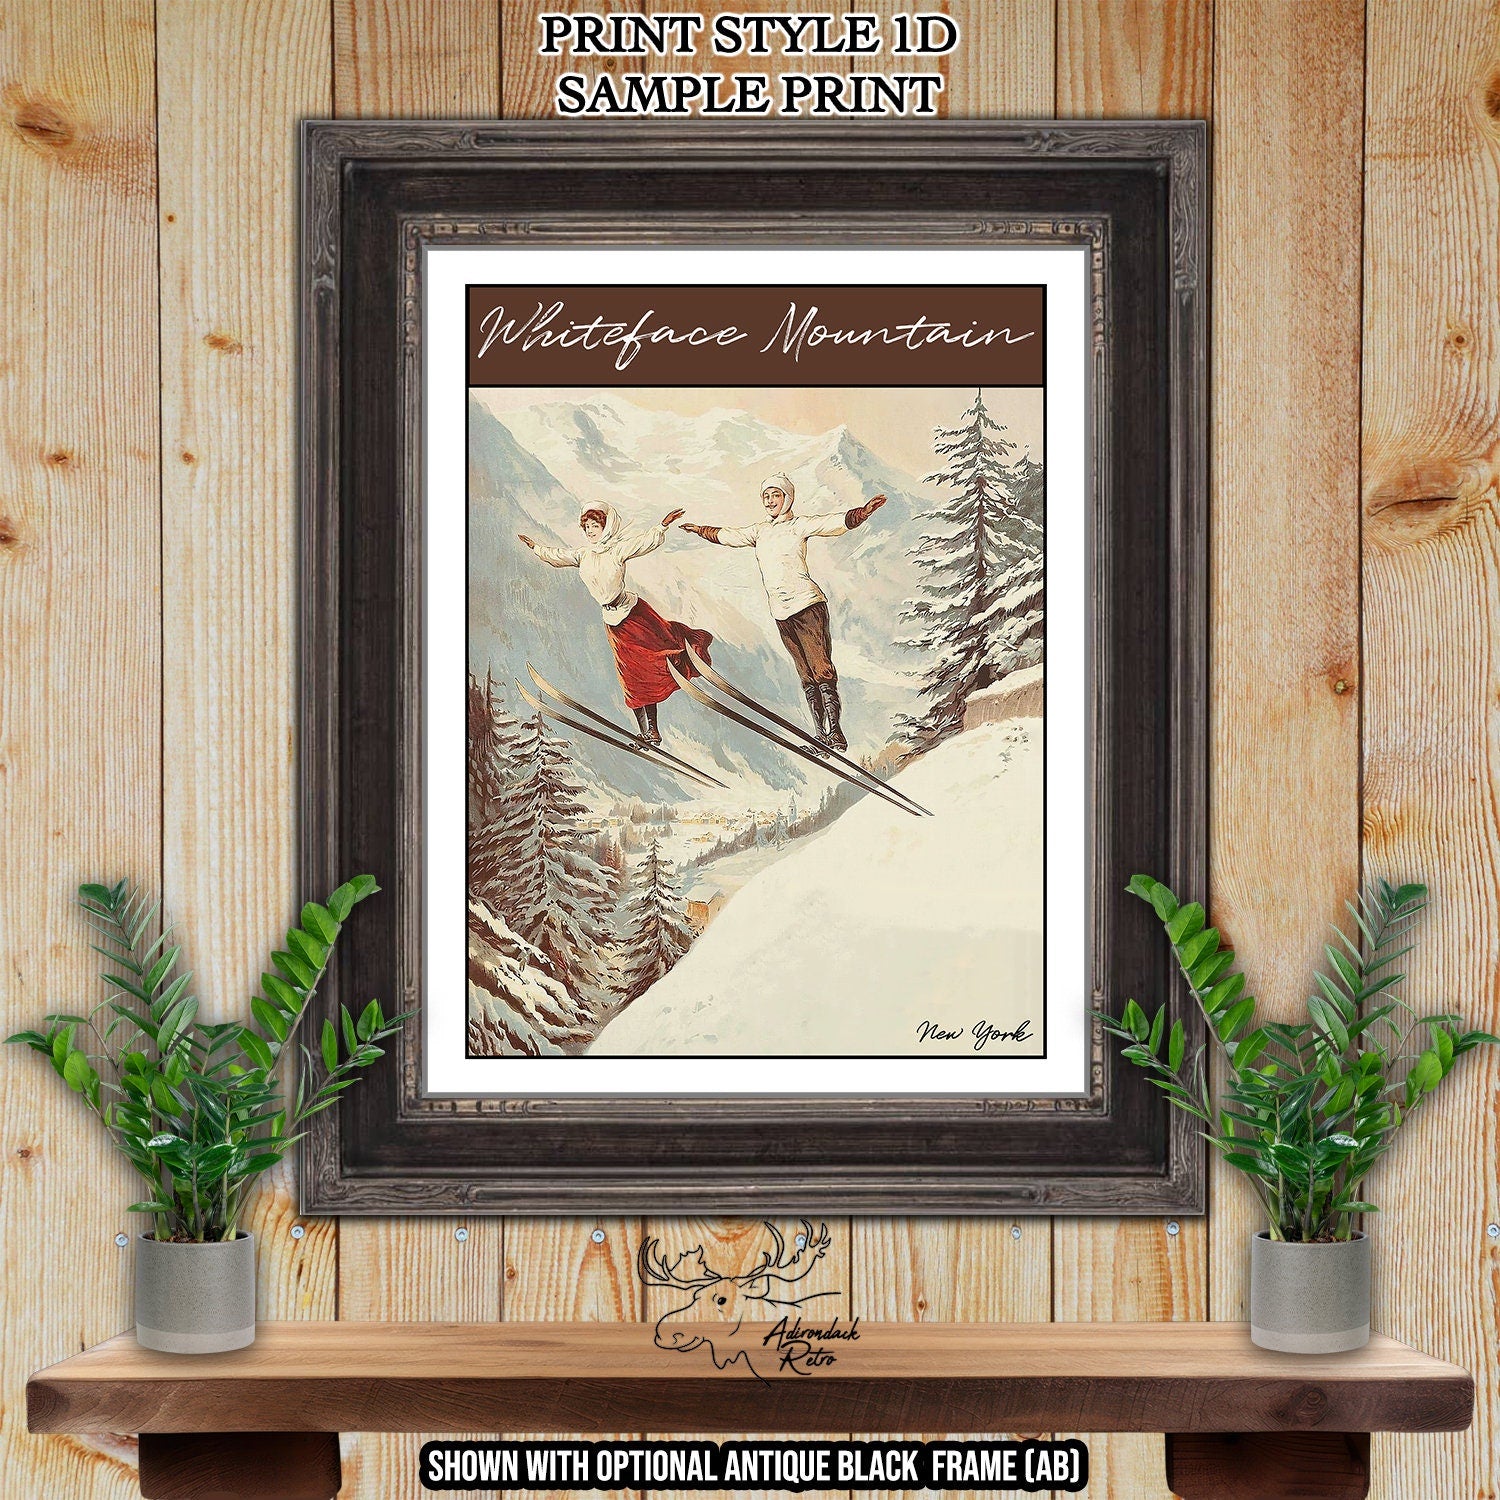 Soldier Mountain Idaho Retro Ski Resort Print